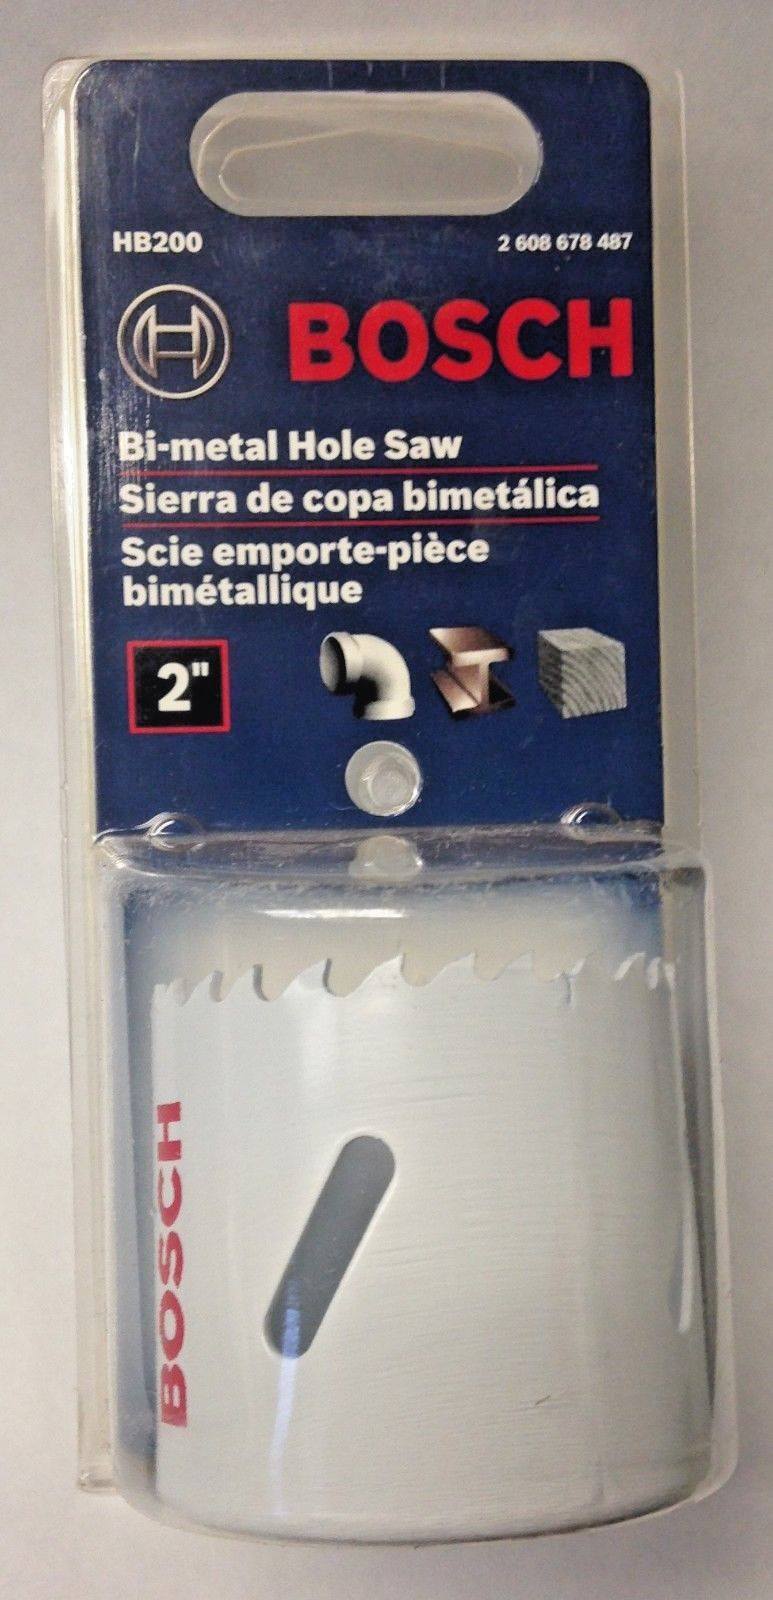 Bosch HB200 2" Bi-Metal Hole Saw